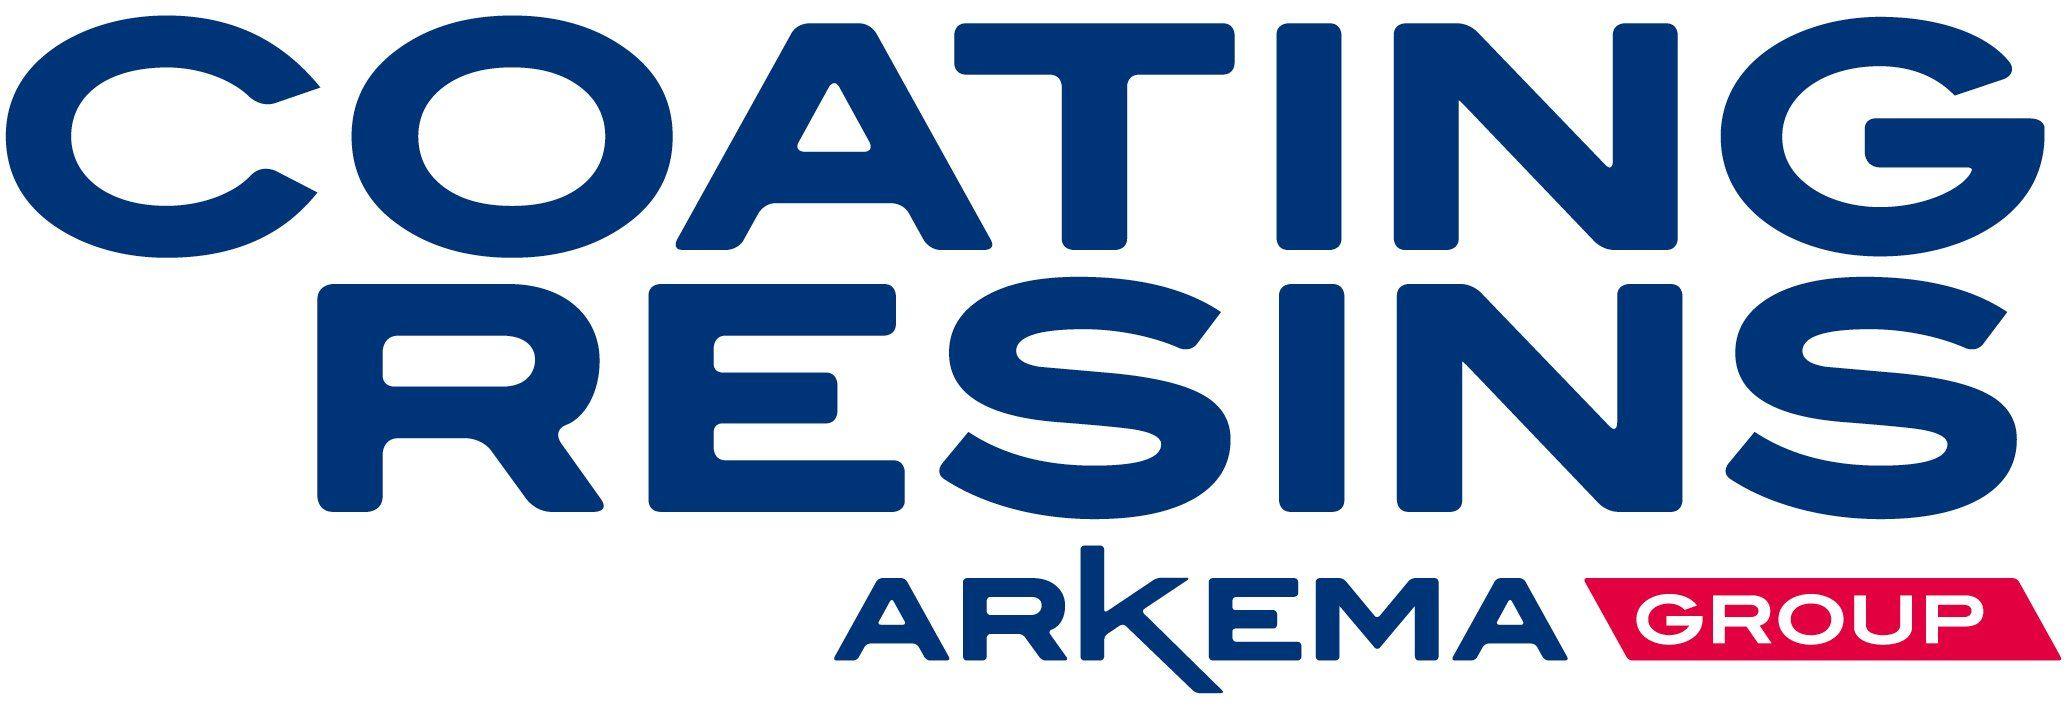 Arkema Logo - Arkema Coating Resins corporate website